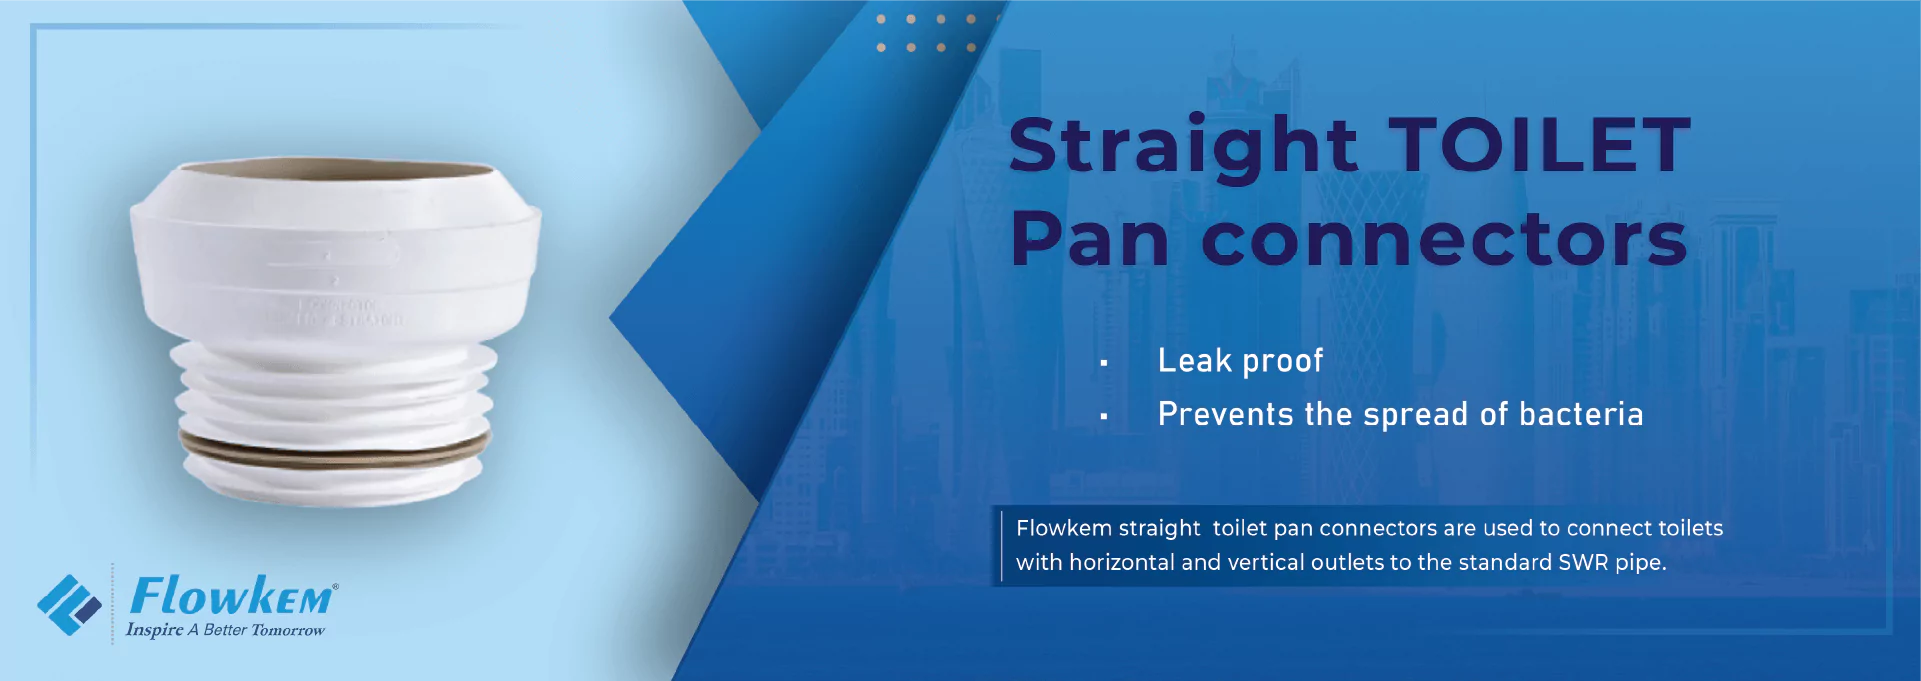 Flowkem Straight Pan Connectors